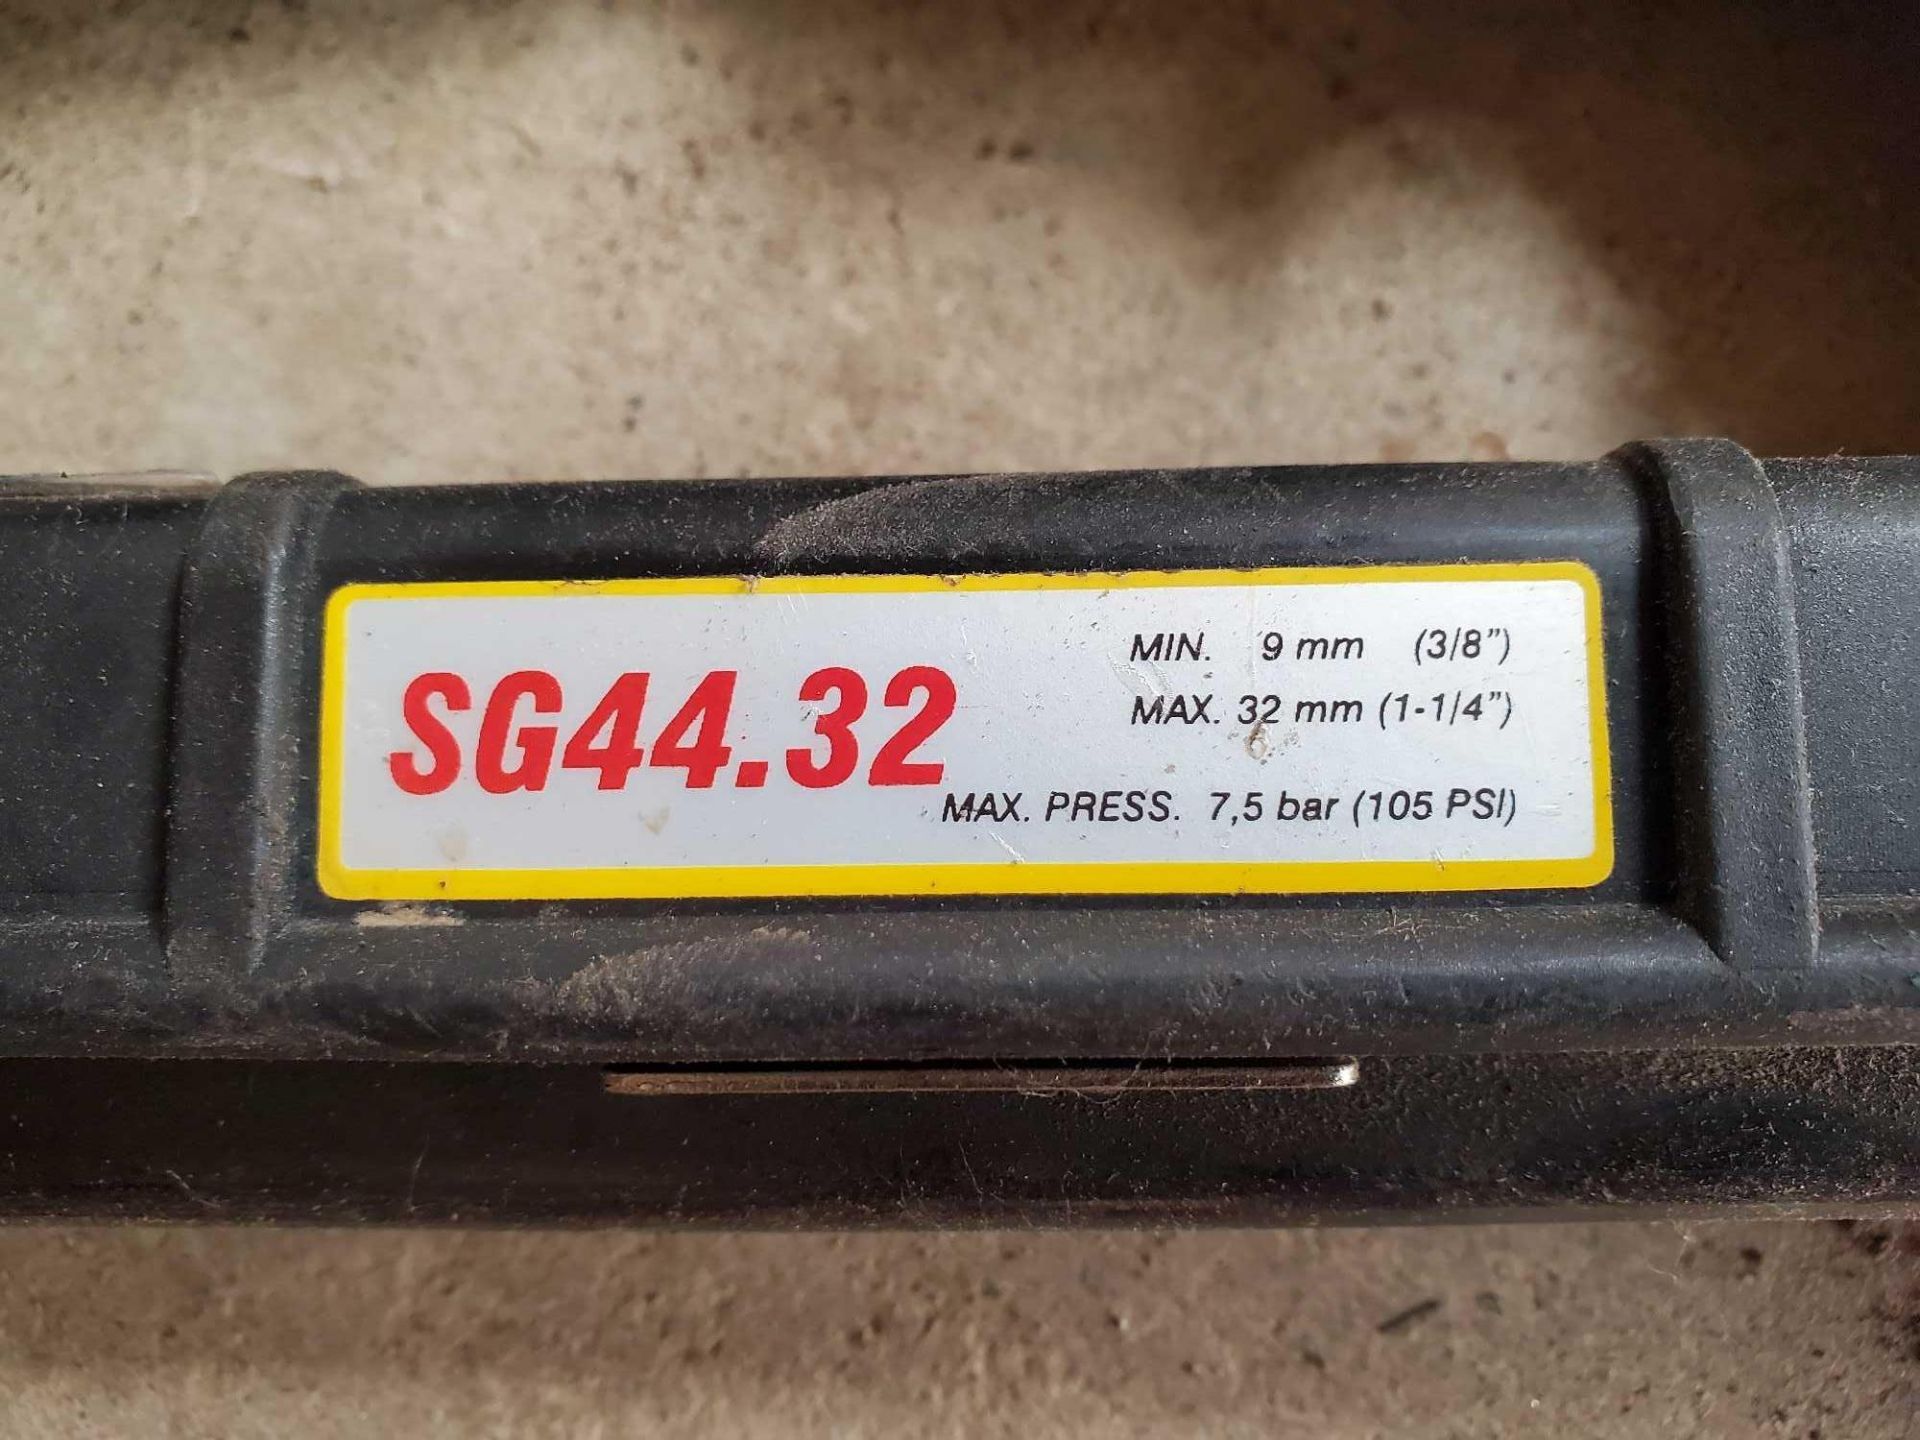 Omer sg44.32 pneumatic stapler / agraffeuse pneumatique omer sg44.32 - Image 2 of 3